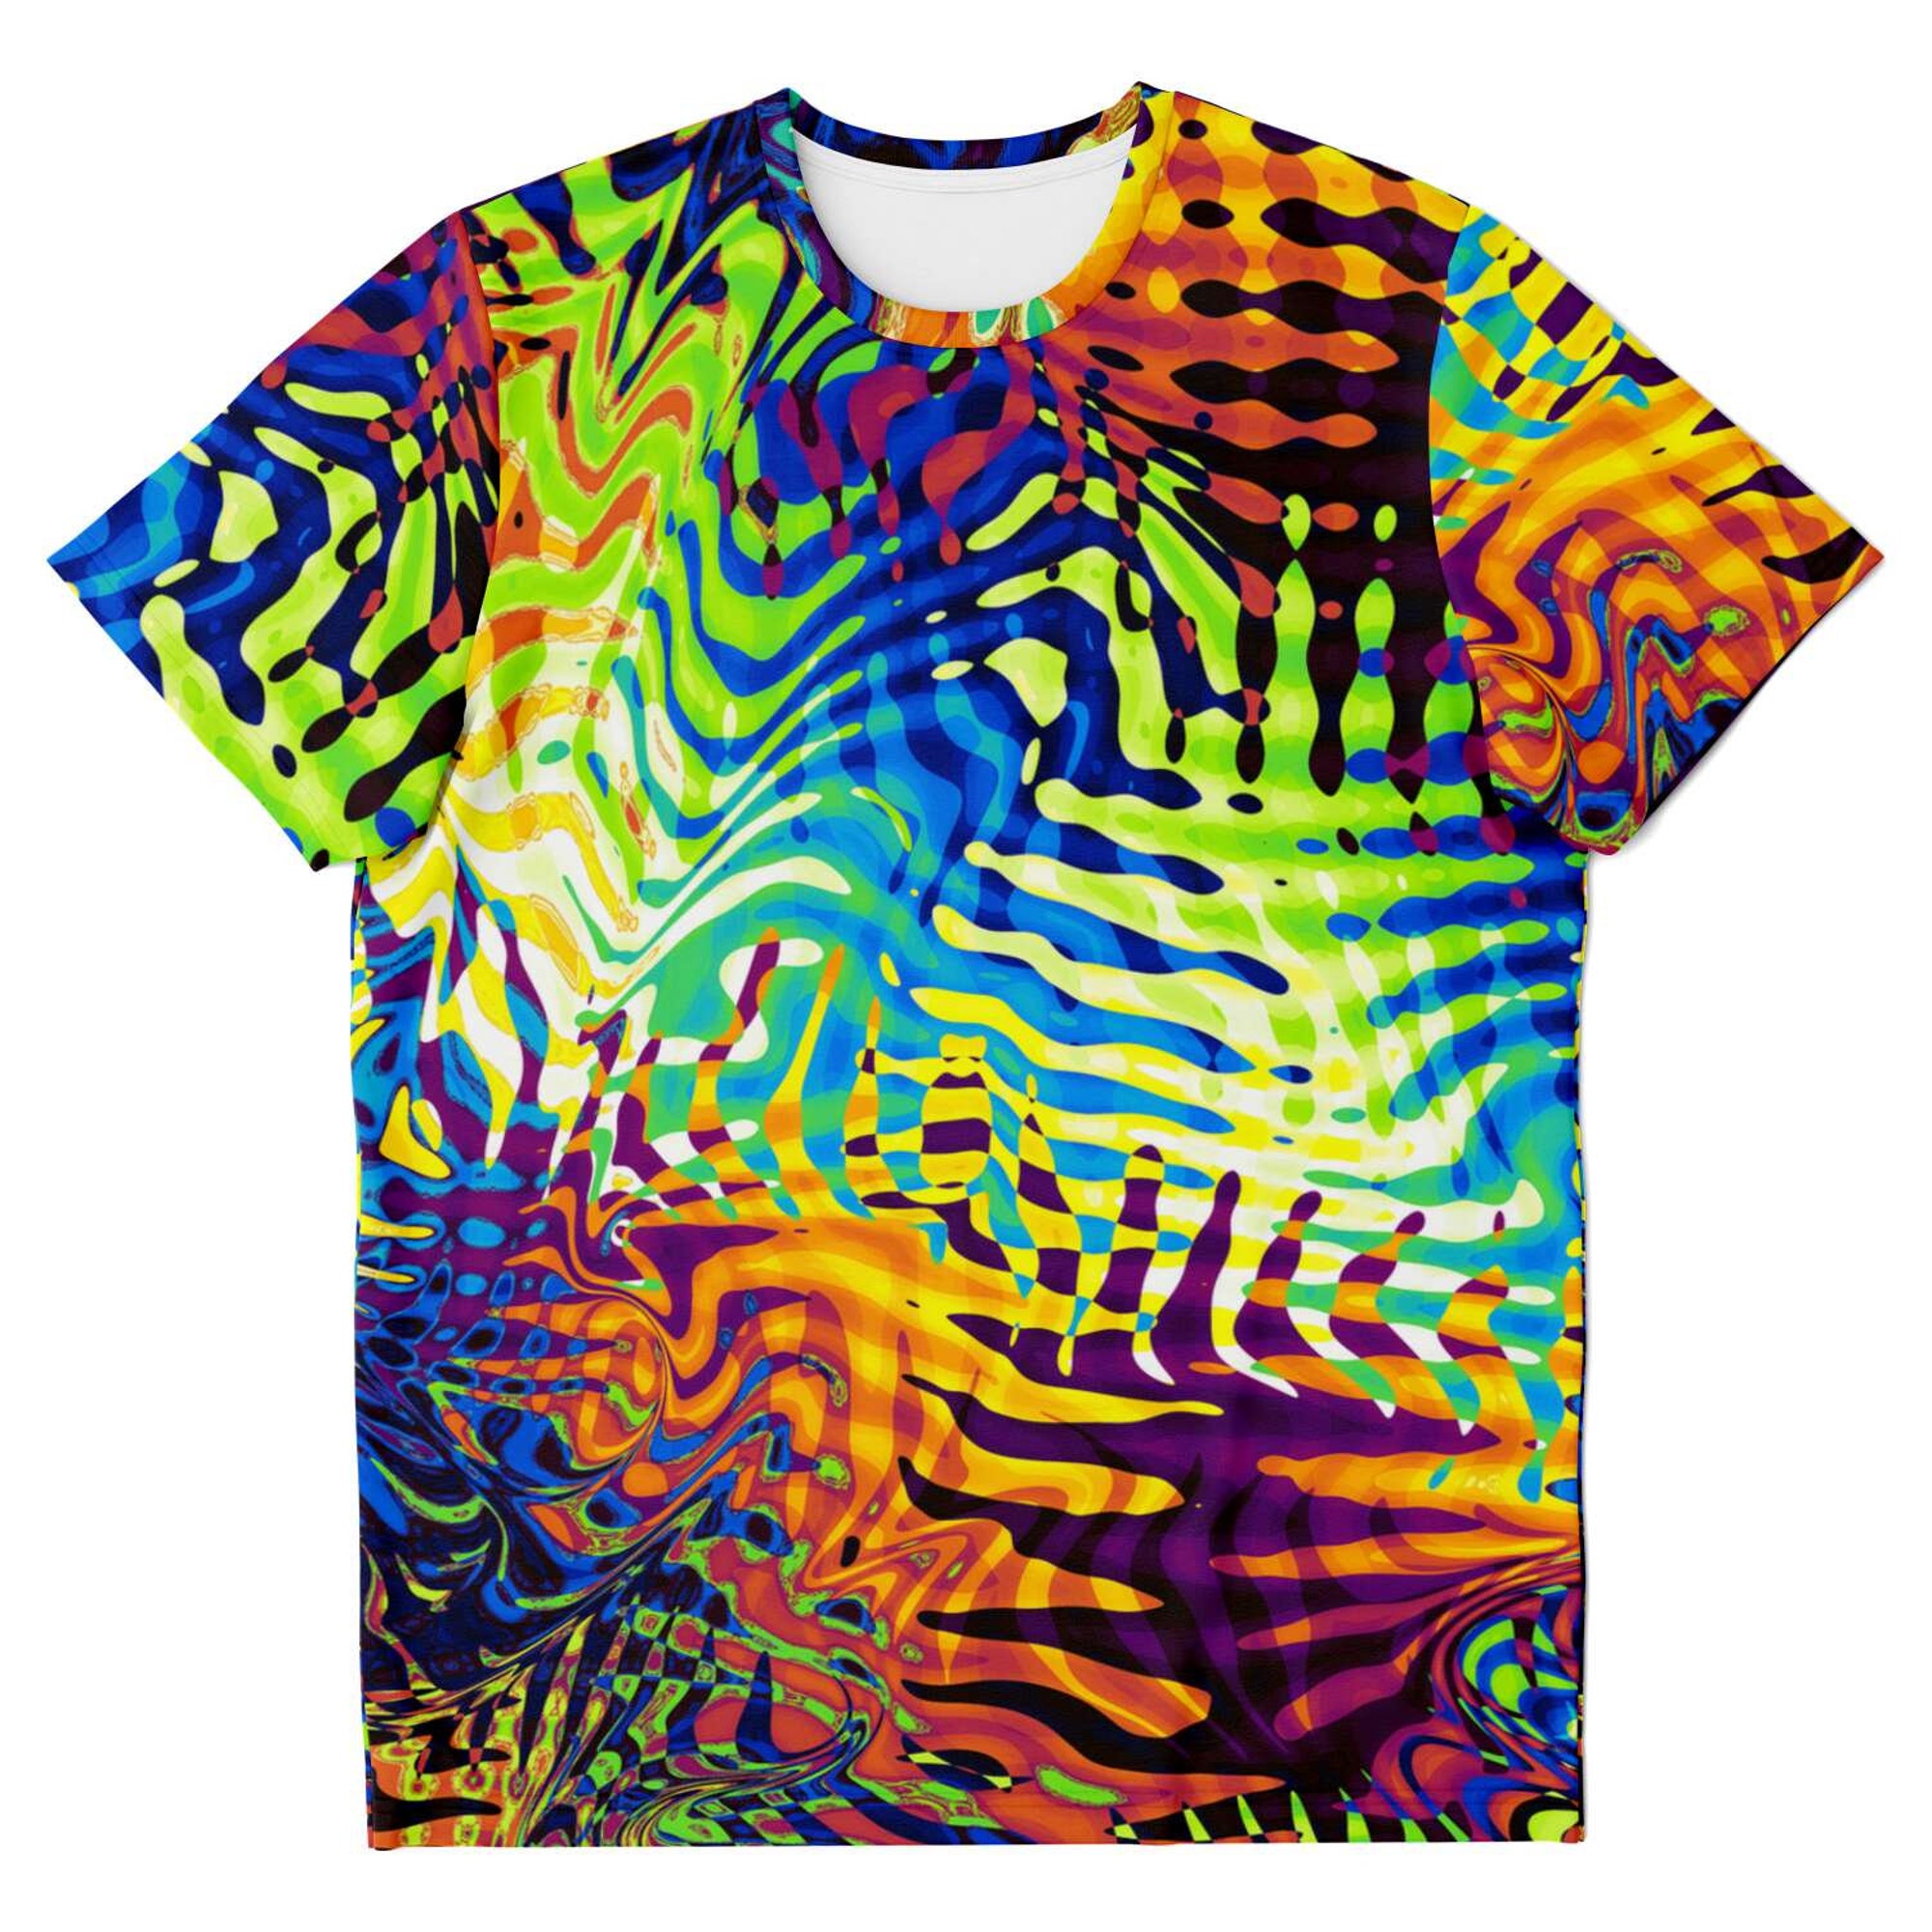 Discover Abstract Colorful Paint LSD DMT Festival Edm 3D T Shirt